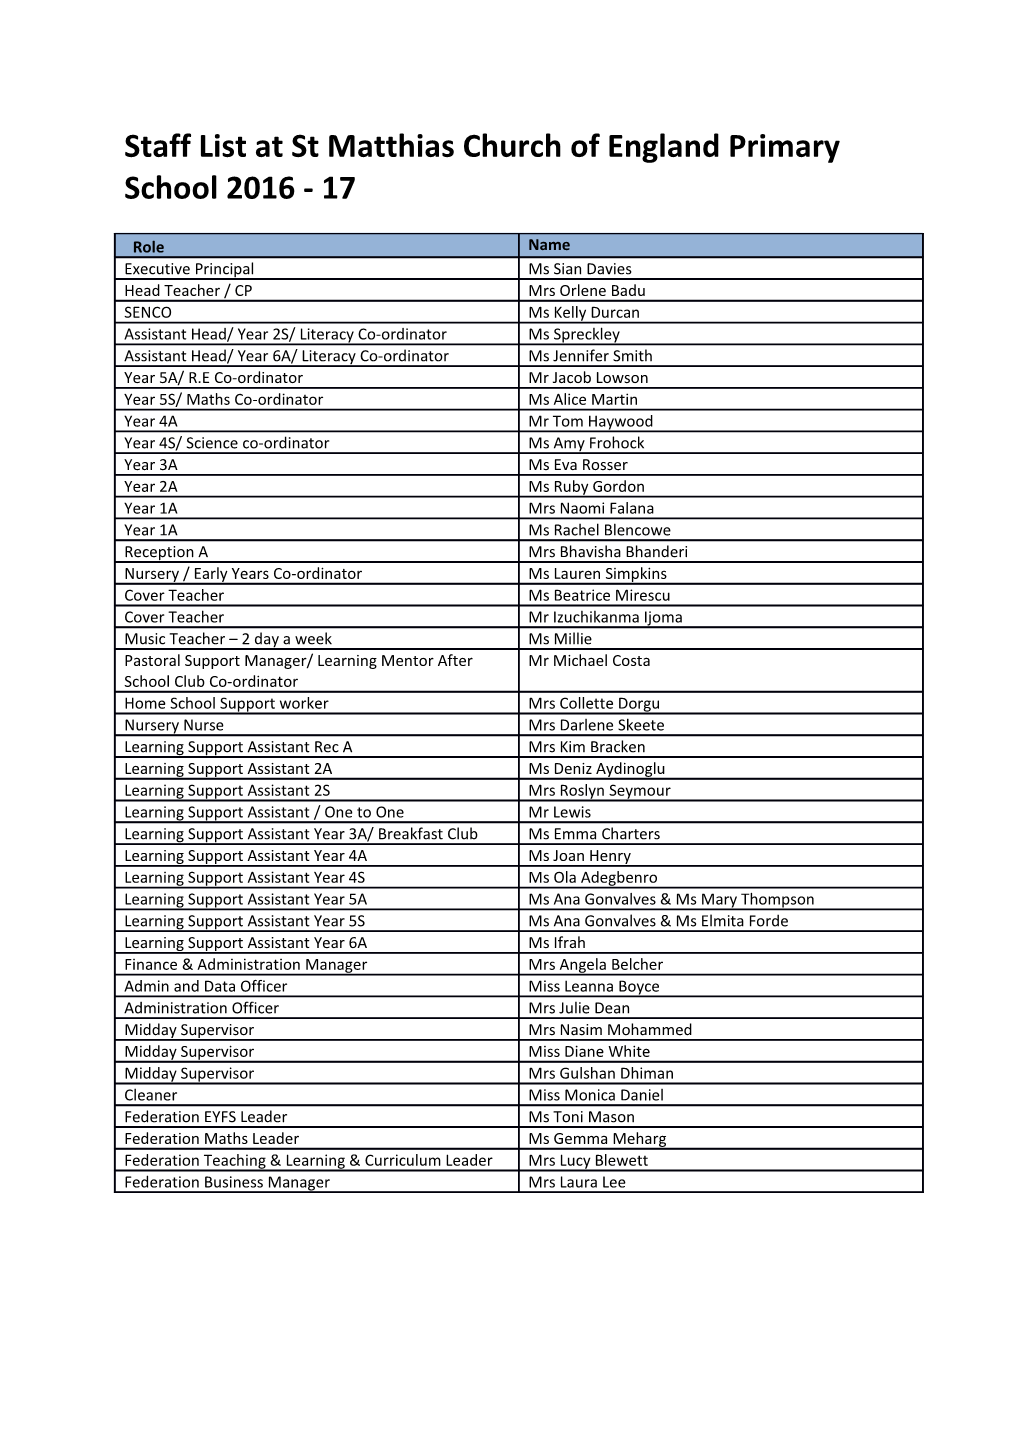 Staff List at St Matthias Church of England Primary School 2016 - 17